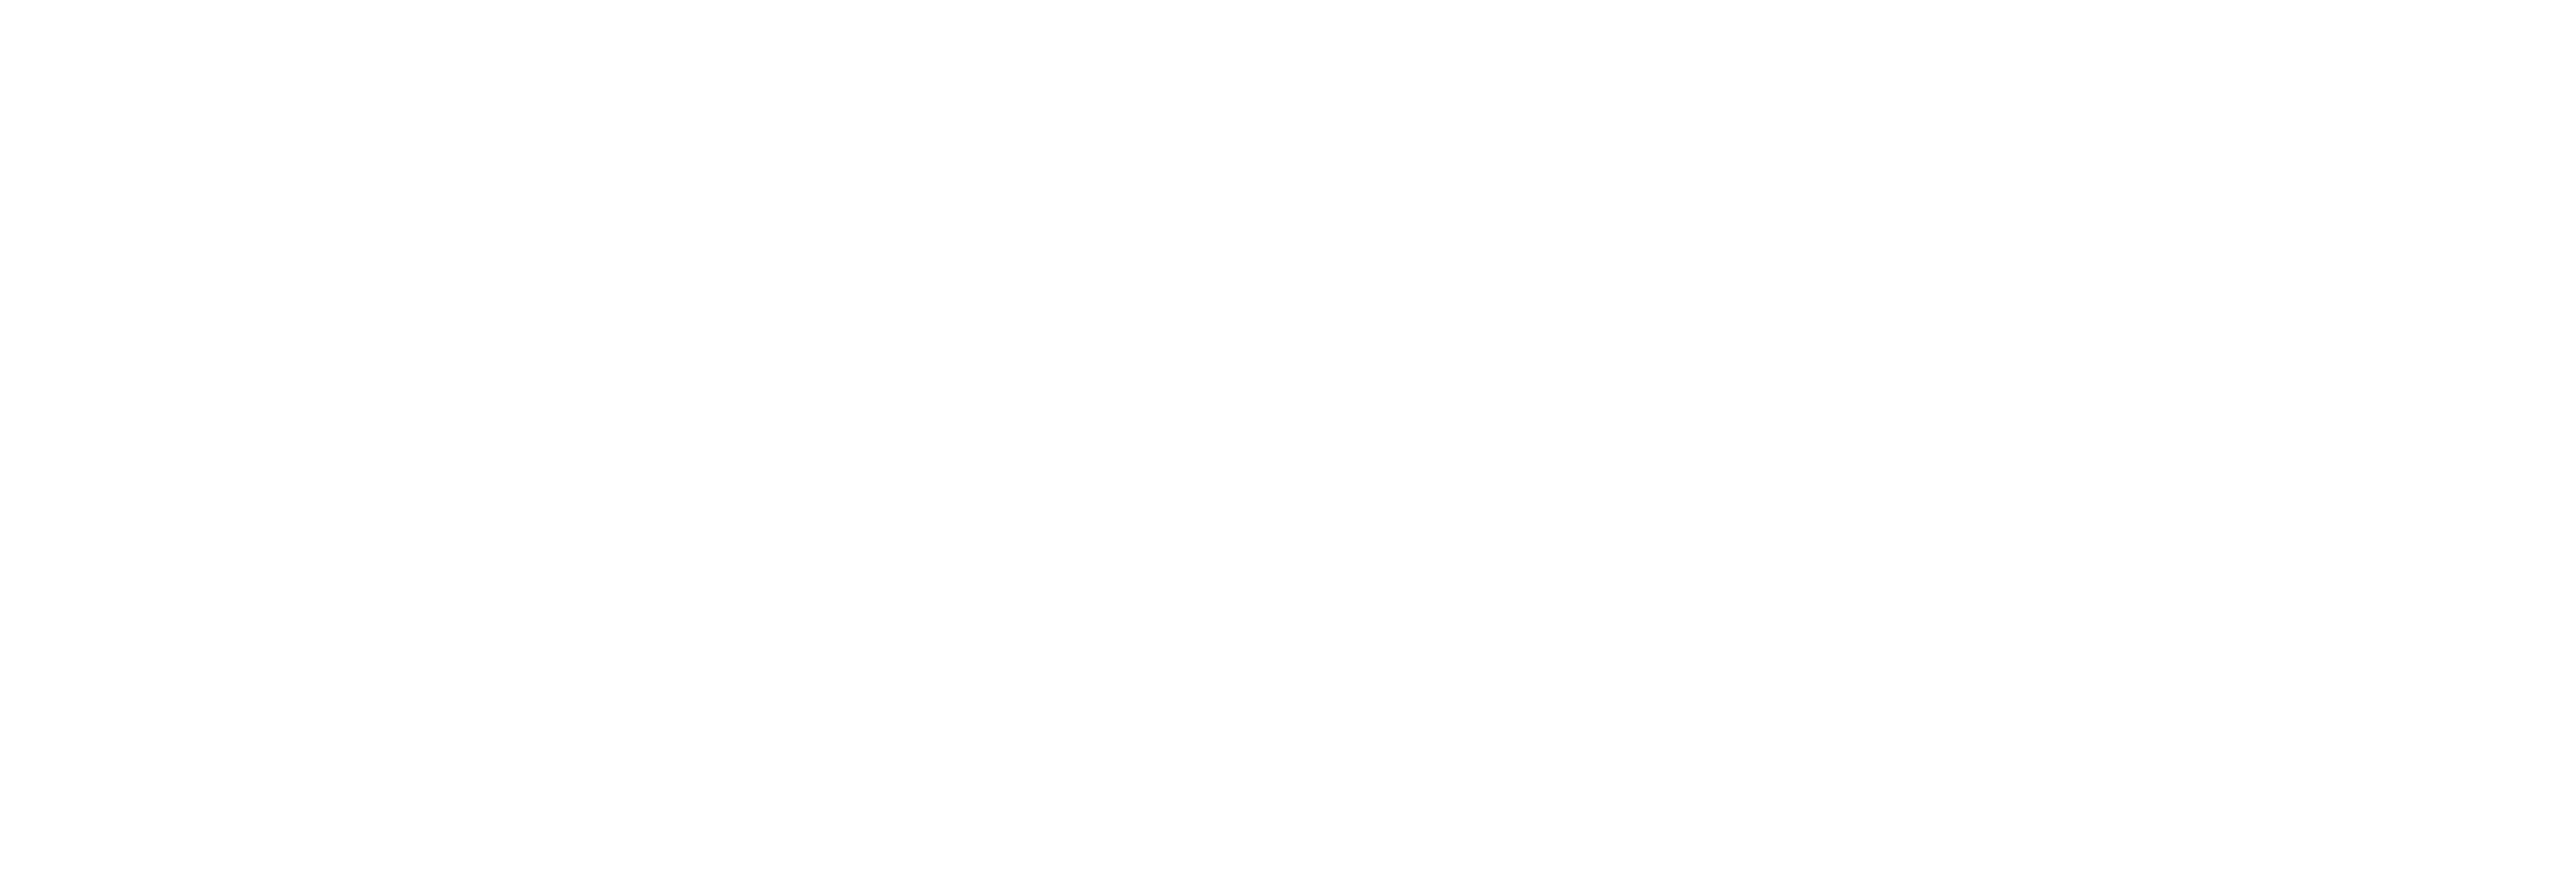 Peninsula Home Health Care logo